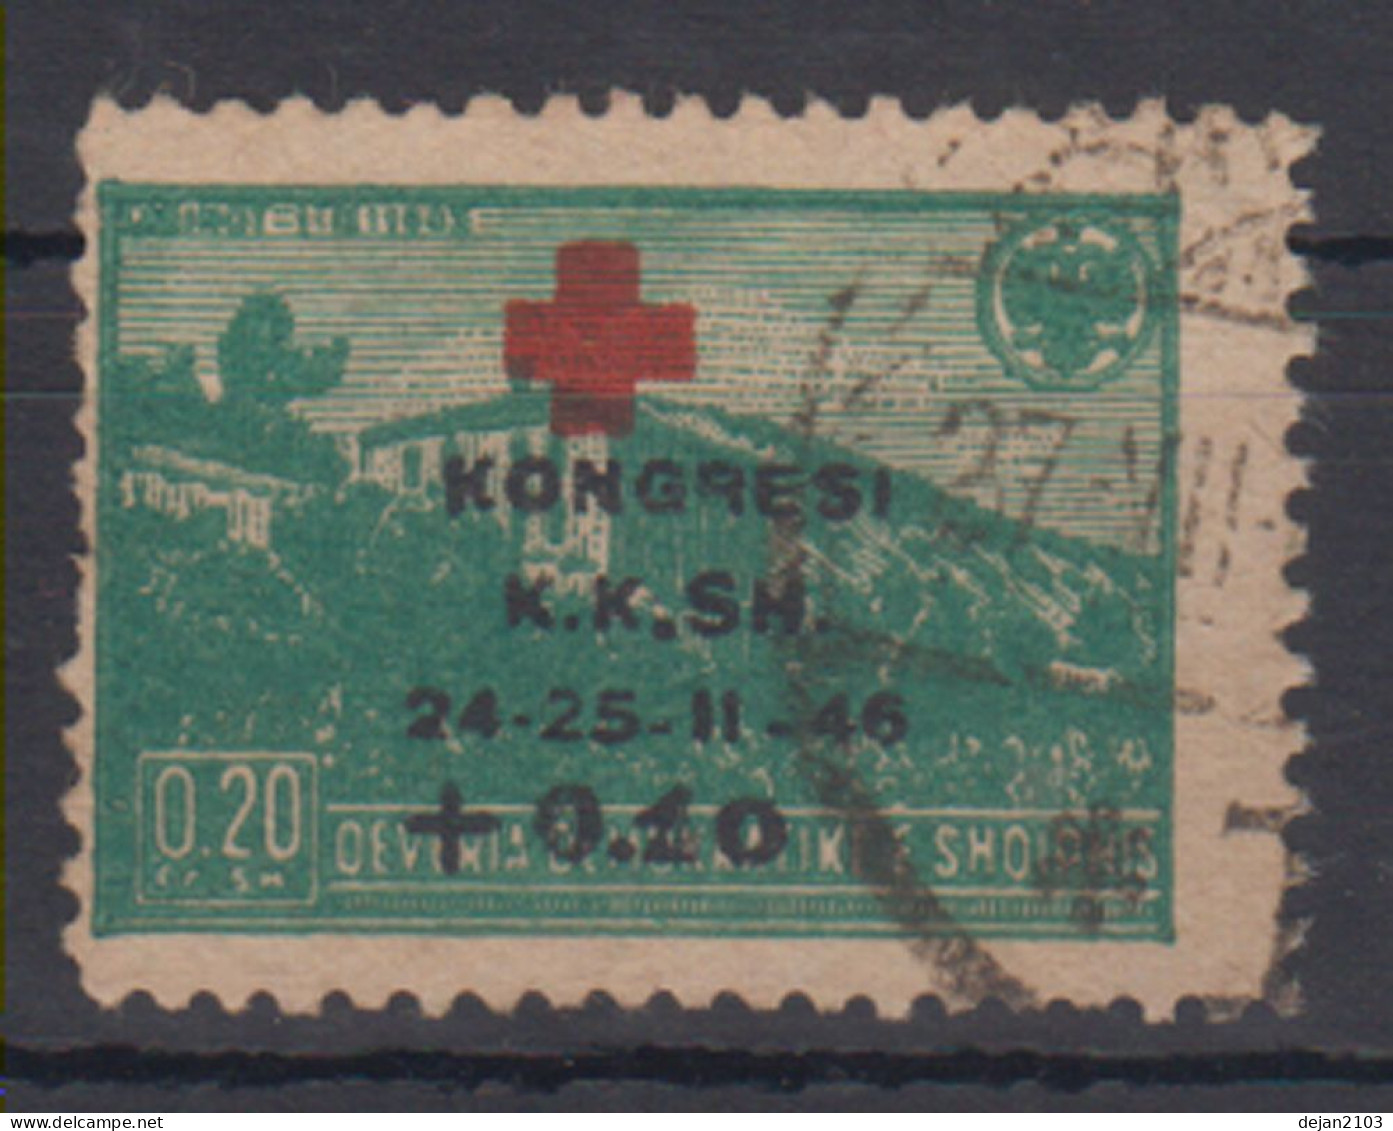 Albania Red Cross Mi#385 1946 USED - Albania